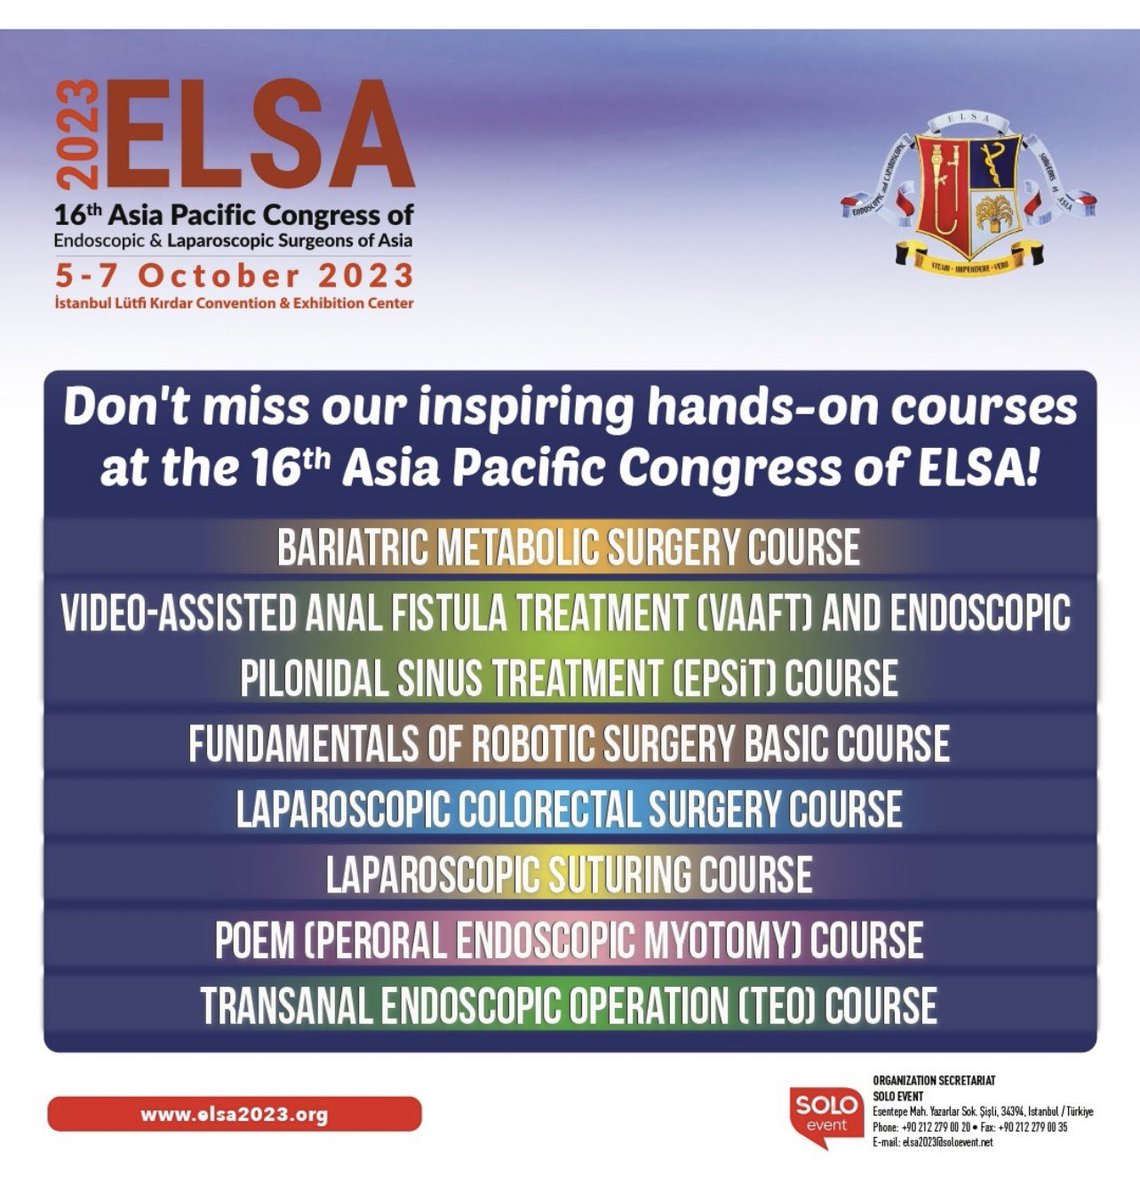 16th Asia Pacific Congress of ELSA!
Hands-on courses #bariatric #fistula #pilonidalsinus #roboticsurgery #colorectal #poem #teo